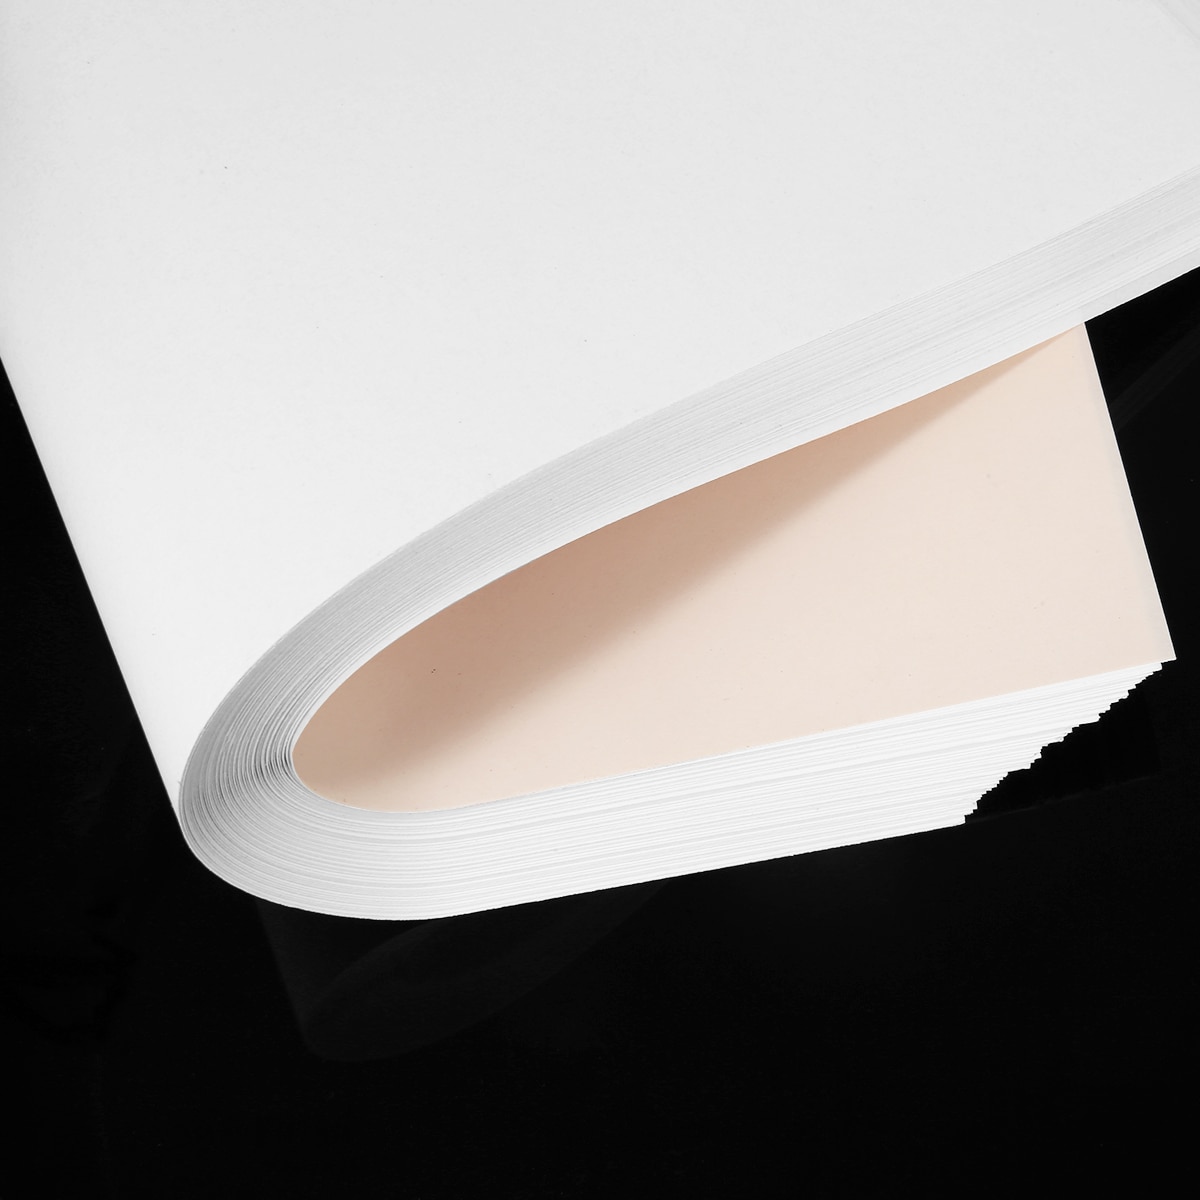 100 stk hvid  a4 varmeoverførselspapir strygepapir til t-shirt inkjet print let stof klud